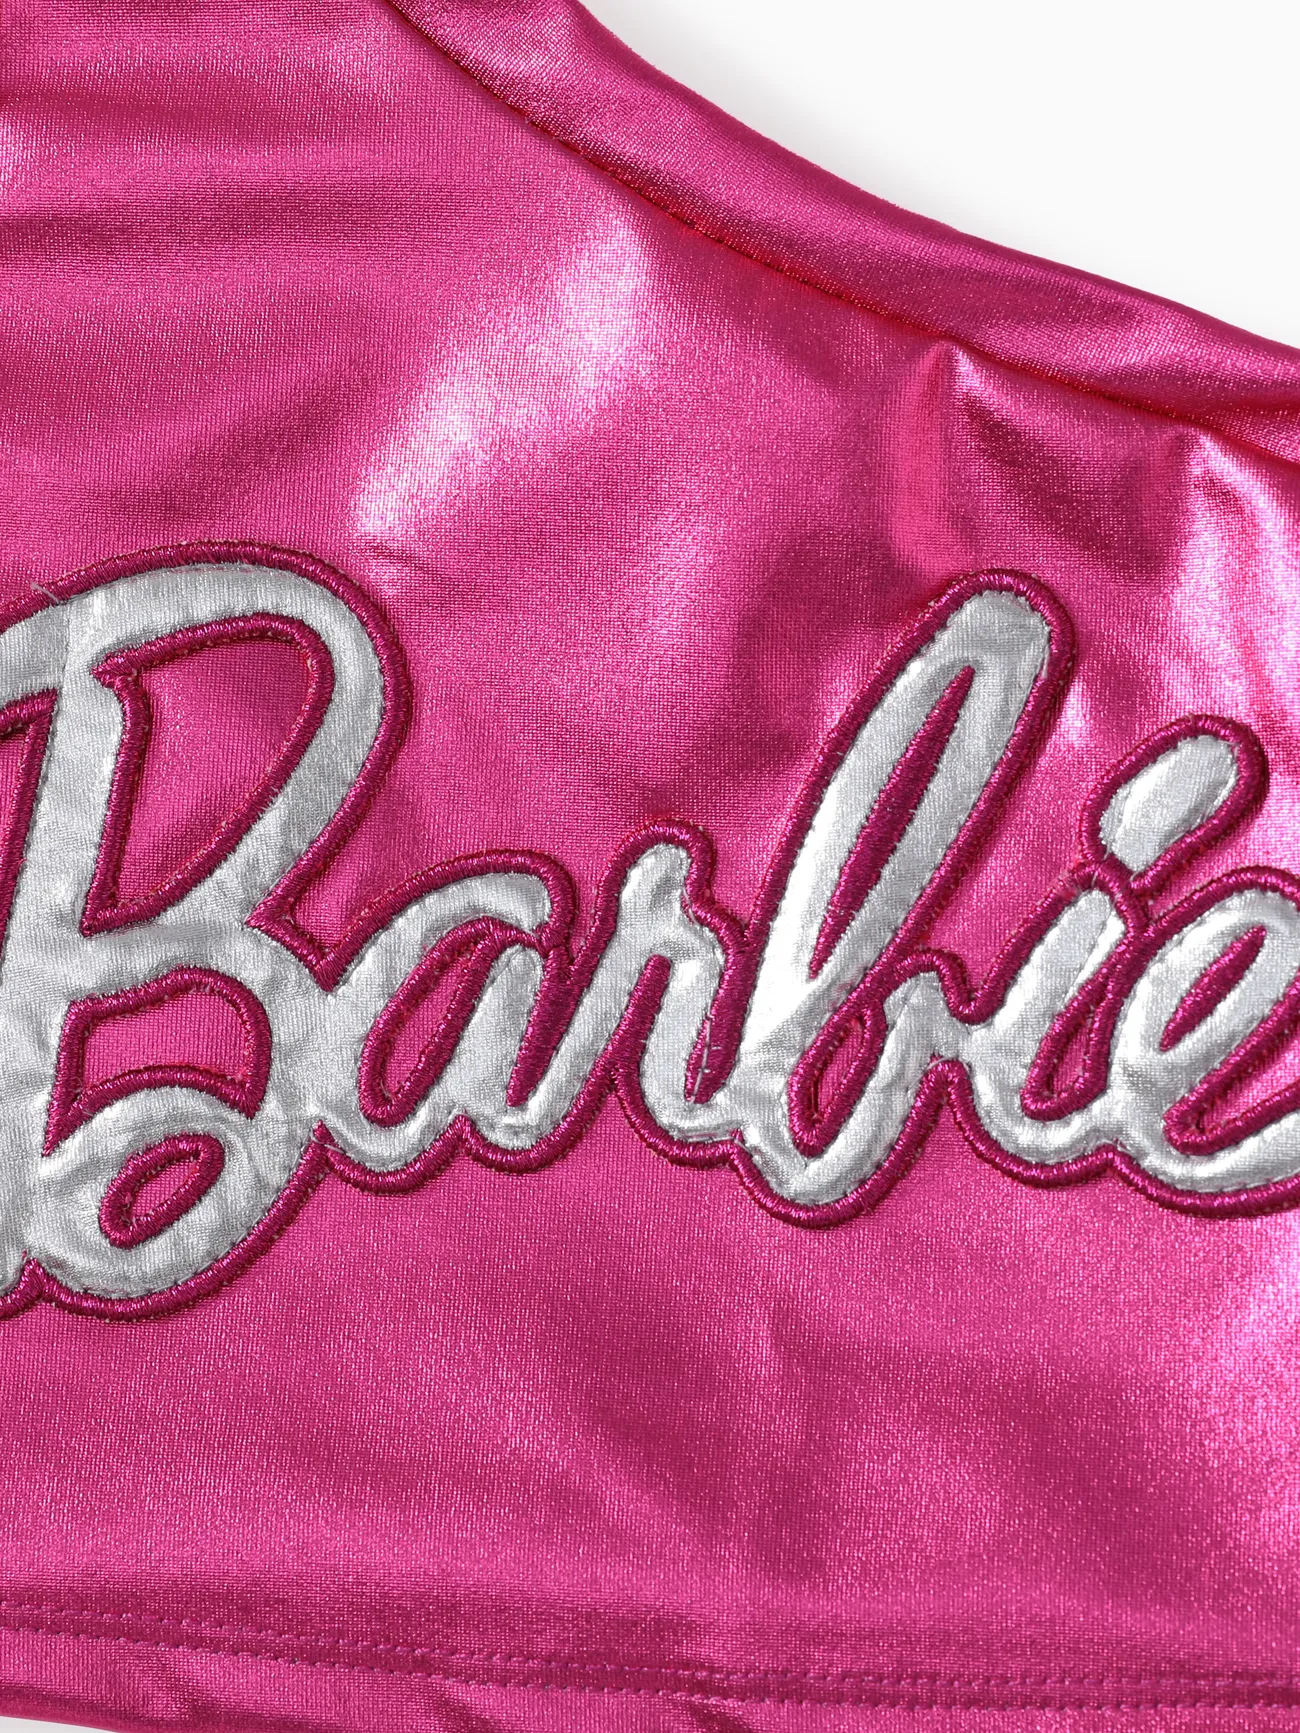 Barbie Toddler Girls 2pcs Classic Logo Print Metallic One-shoulder Top with Skirts Set
 Roseo big image 1